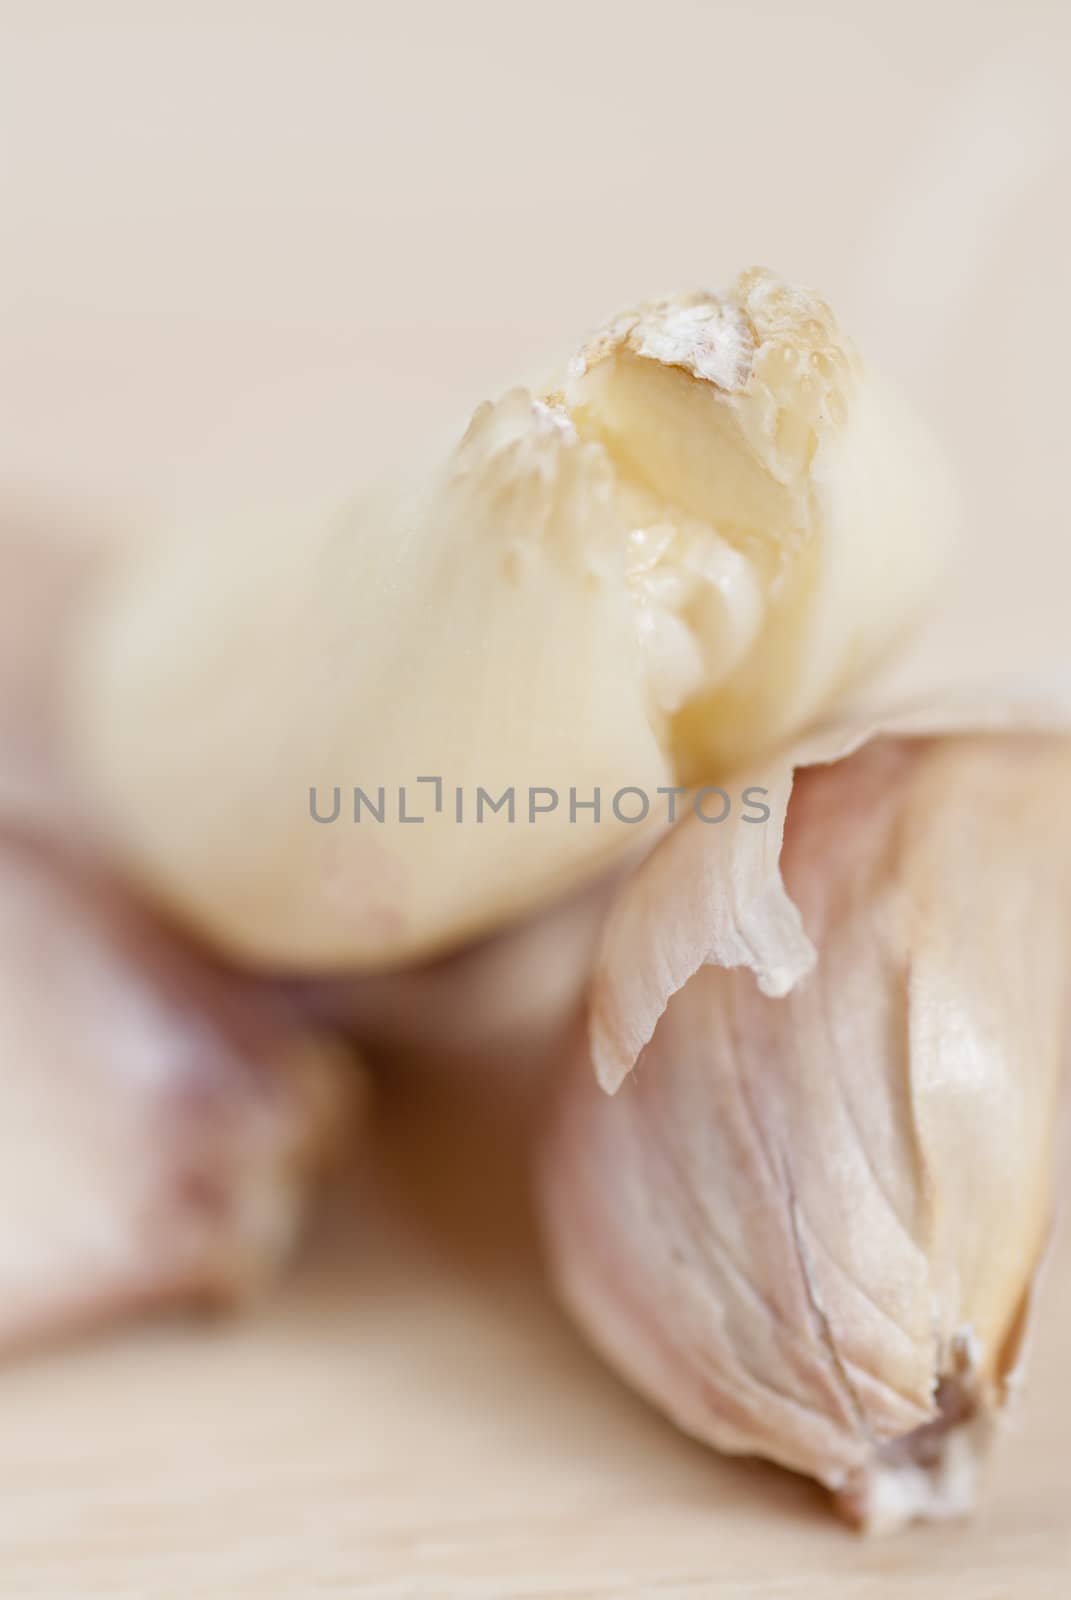 Garlic cloves on wooden surface; Macro.